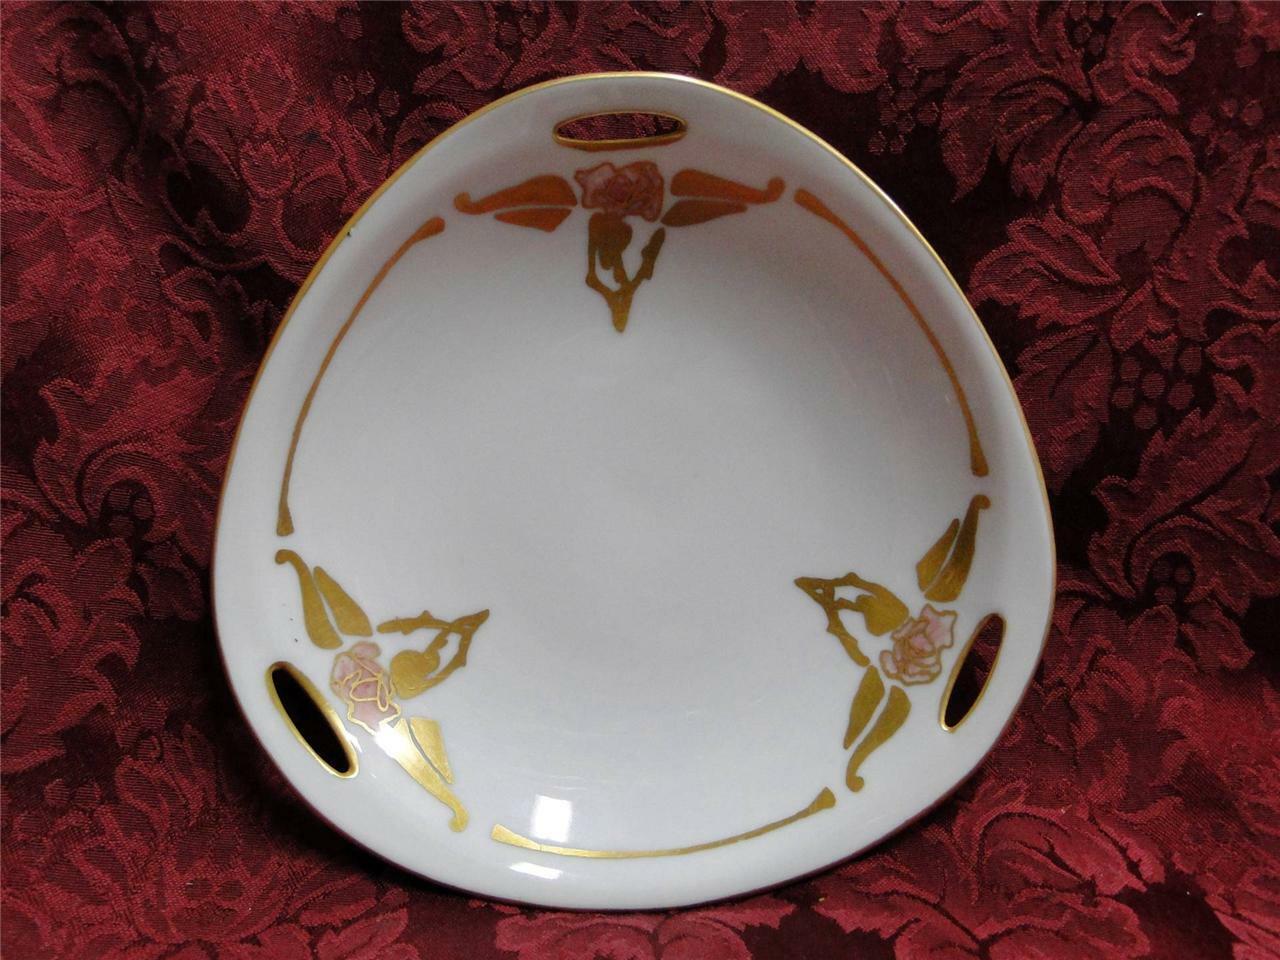 Japan White w/ Pink Flowers, Gold Design & Trim: Triangular Dish, 7.25"